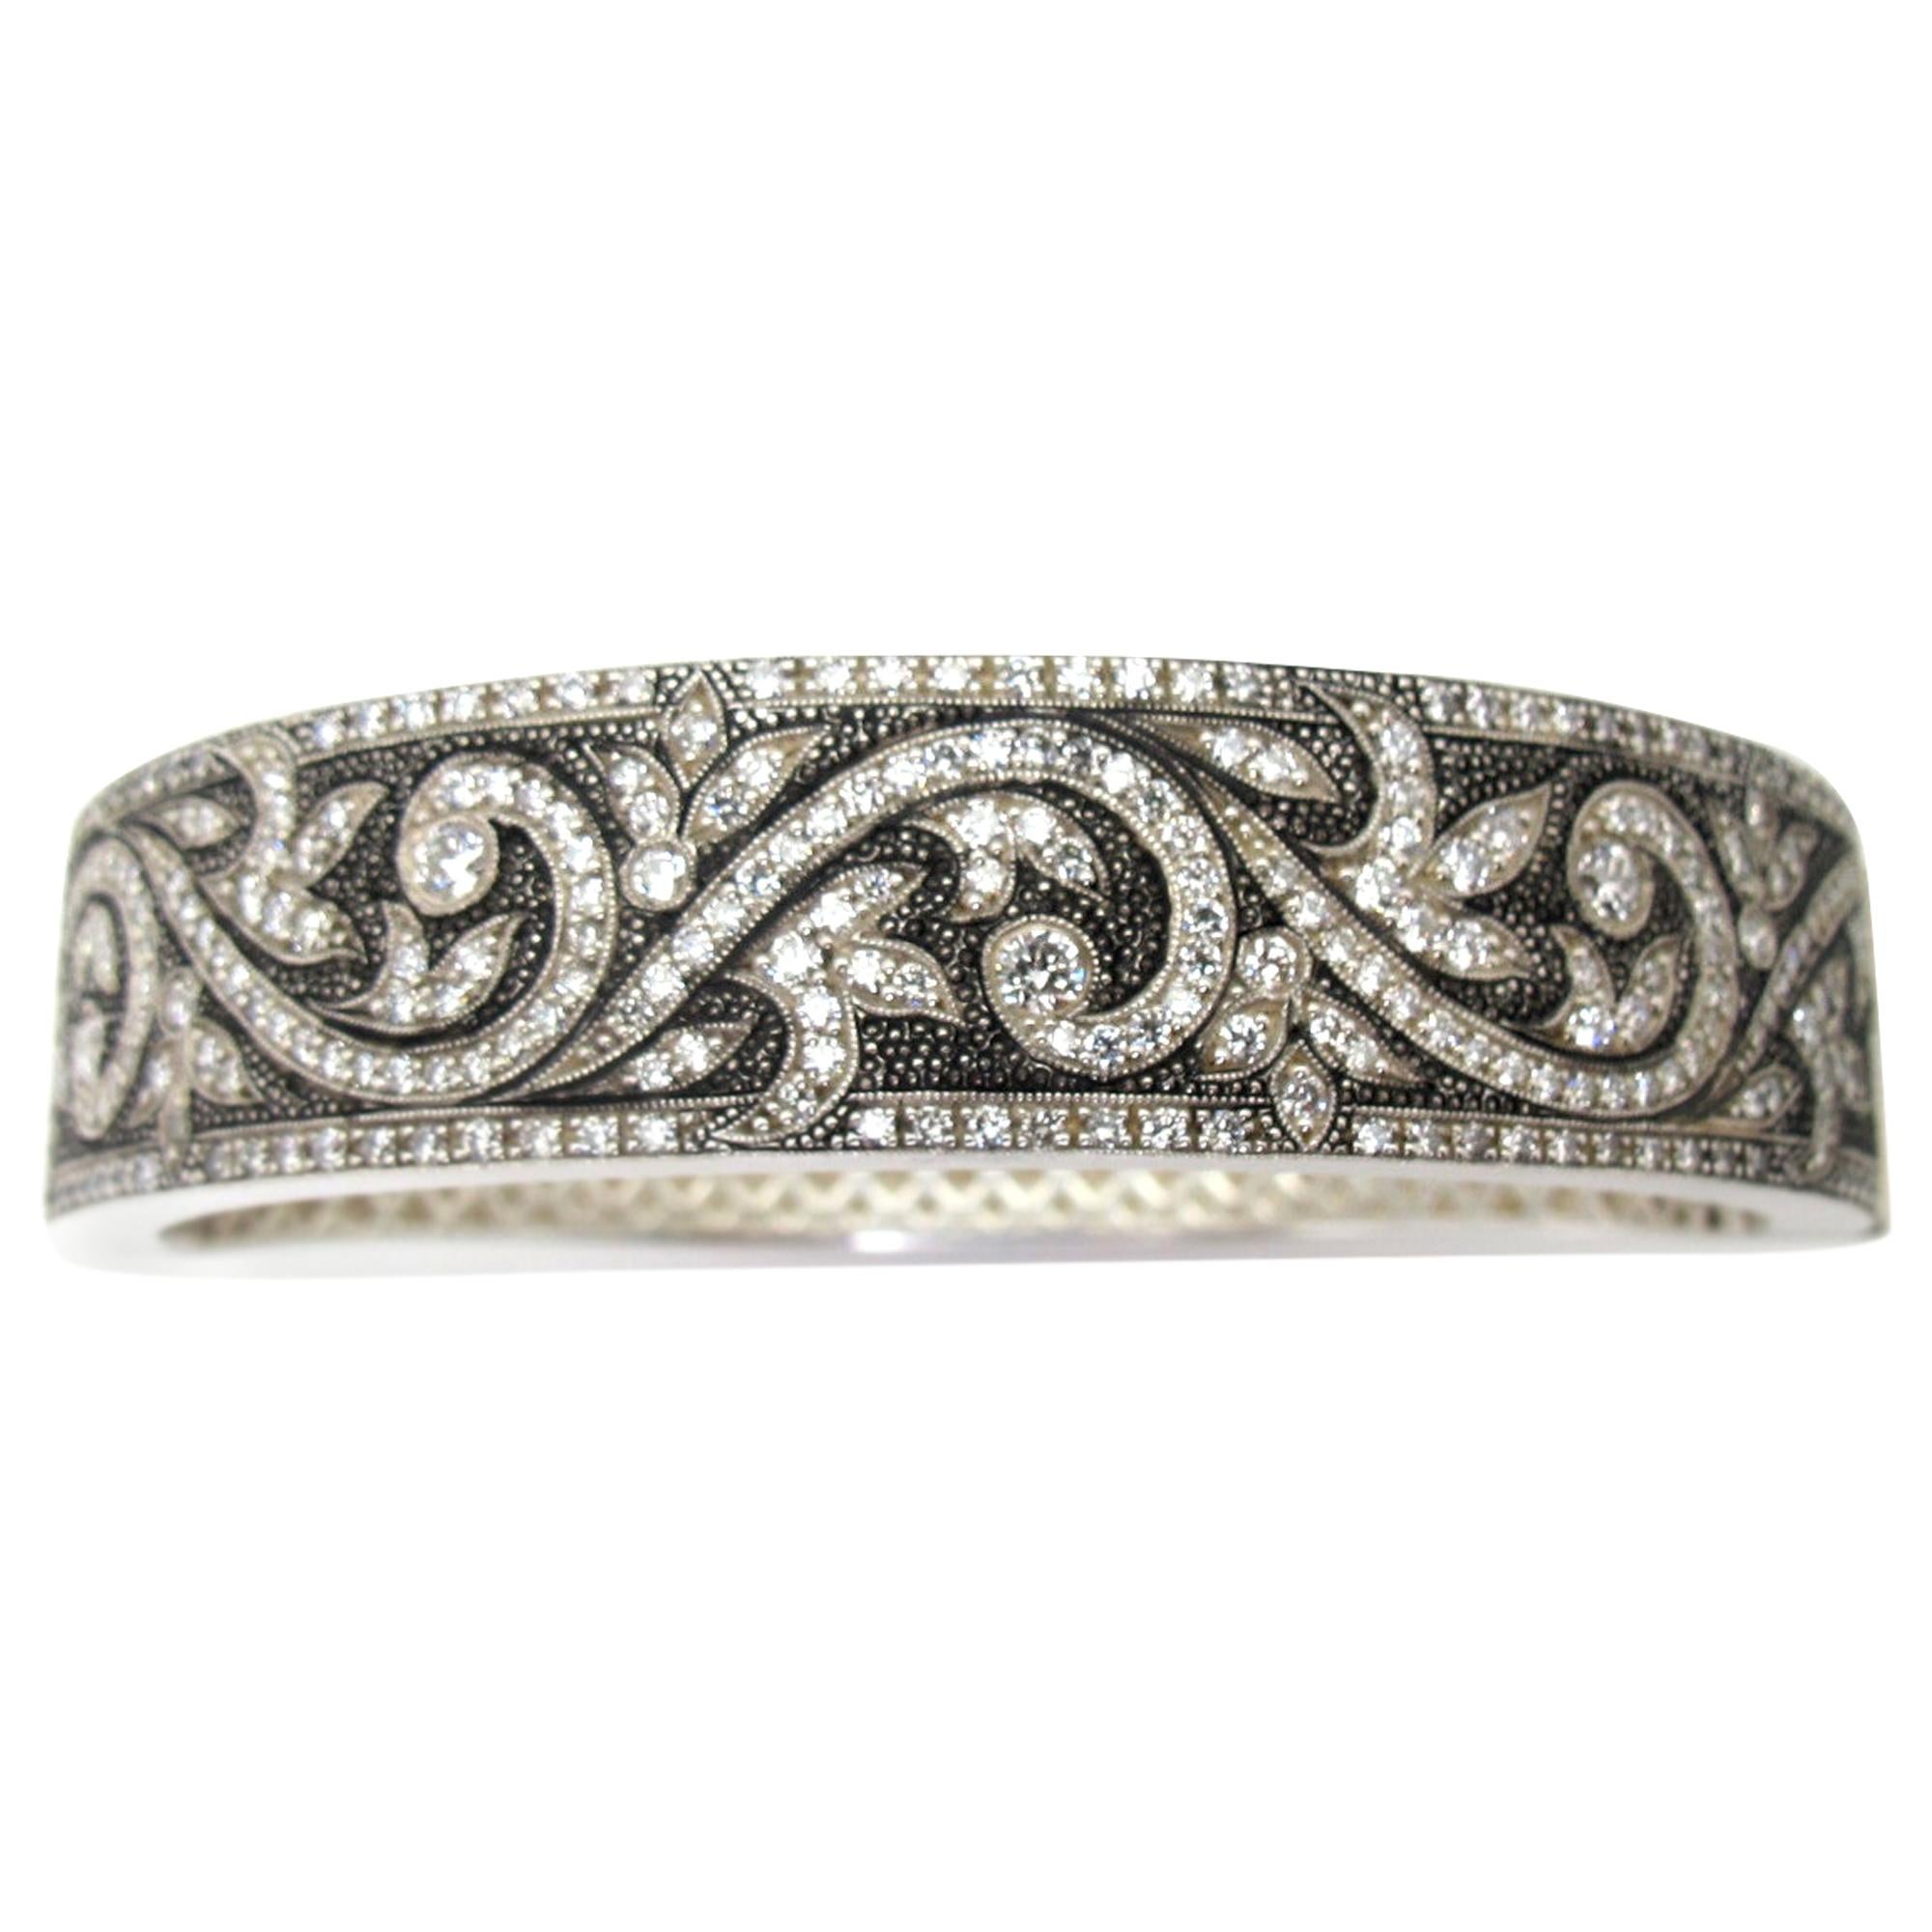 Diamond & Blackened Sterling Silver Scroll Bangle Bracelet, 3.50 Carats Total  For Sale